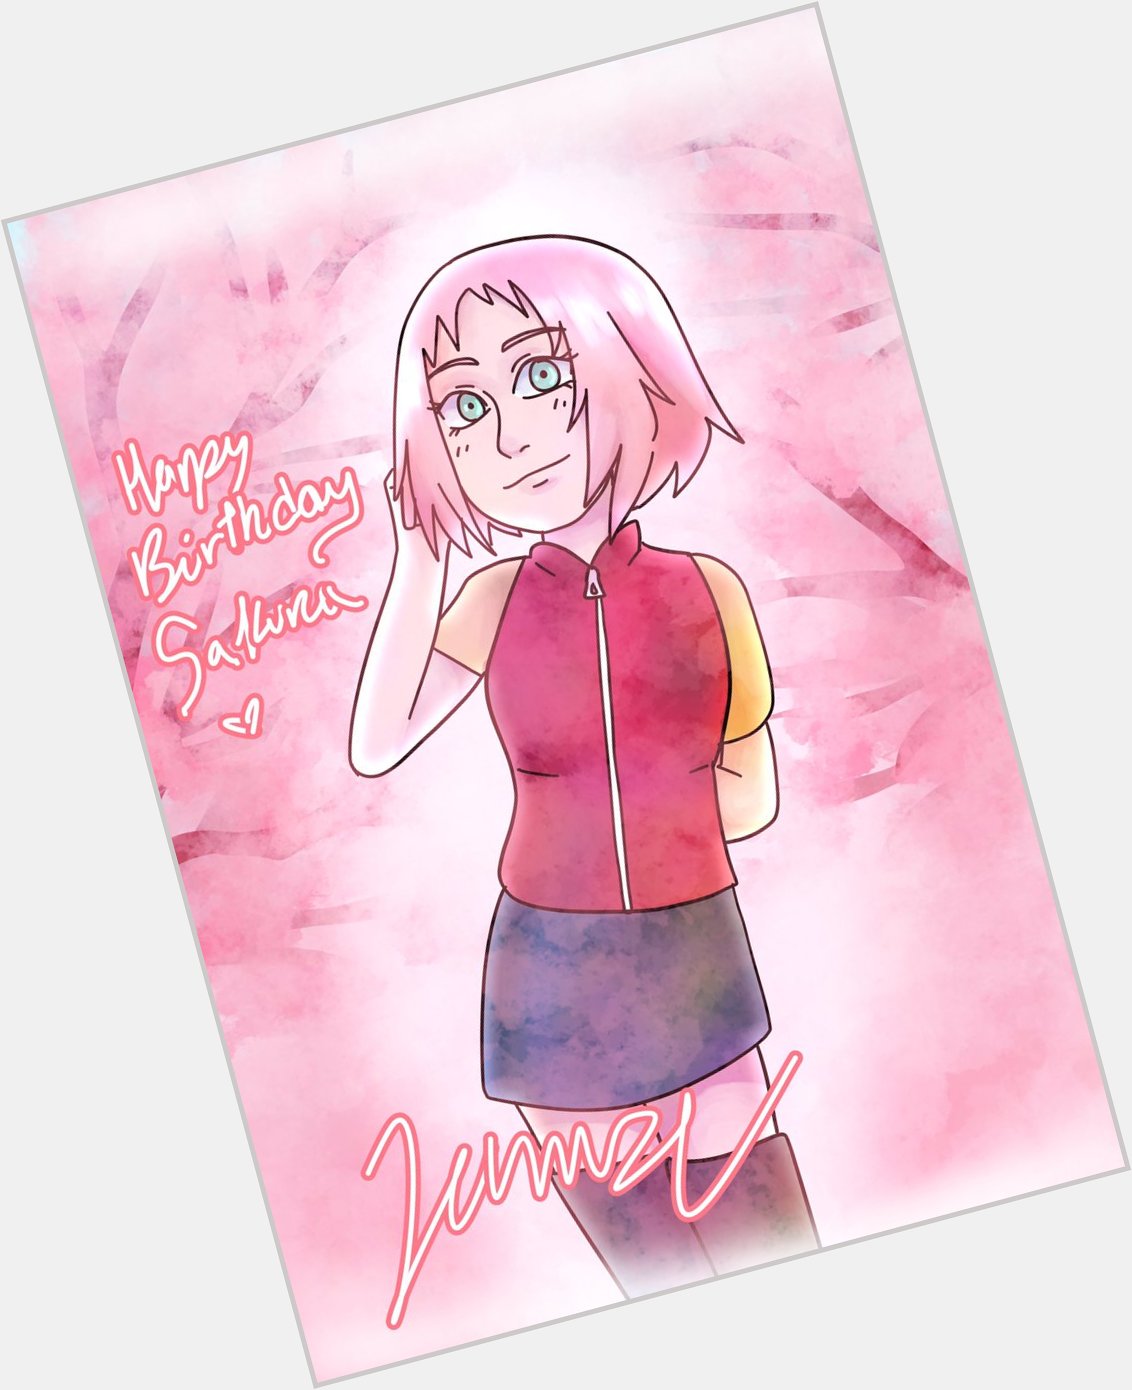 Happy birthday Sakura Haruno!   